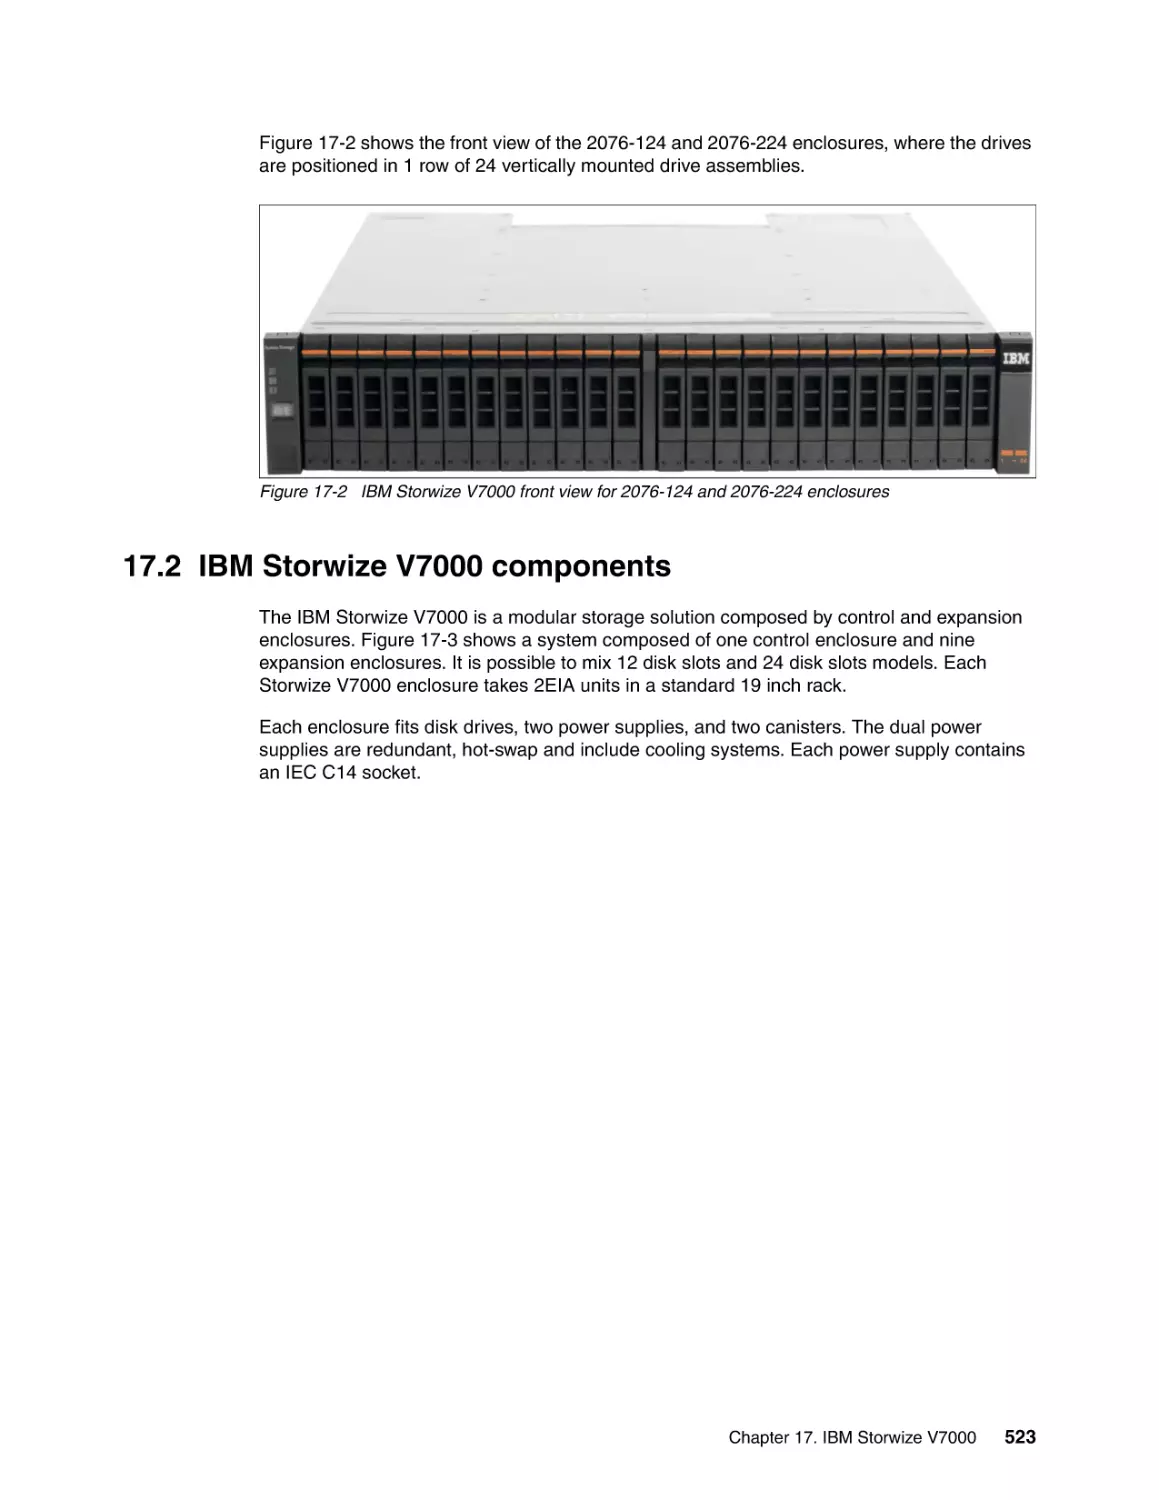 17.2 IBM Storwize V7000 components